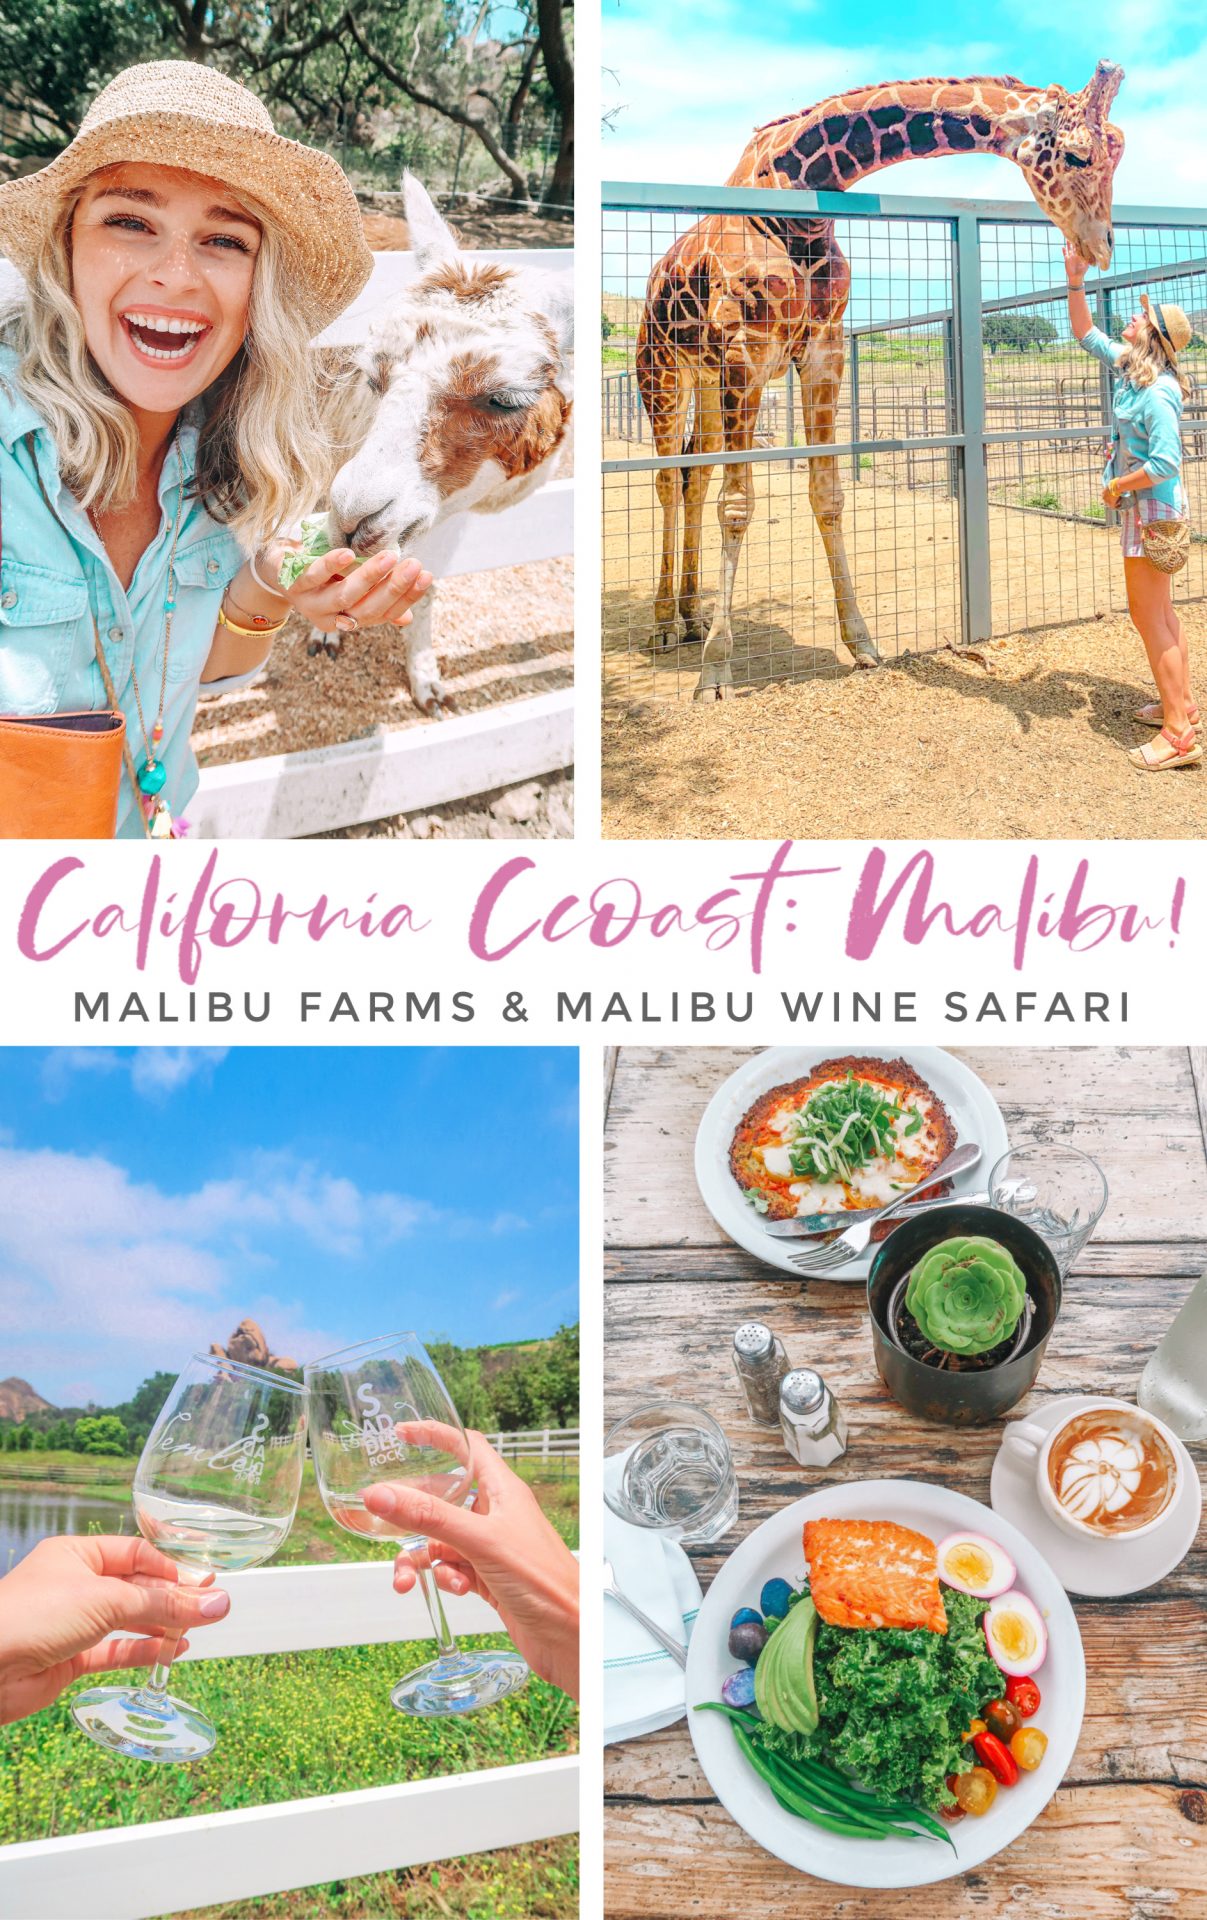 Malibu farms, california coast, restaurants, pacific highway, highway one, malibu wine safari, visiting malibu, LA, los Angelos, orange county, travel